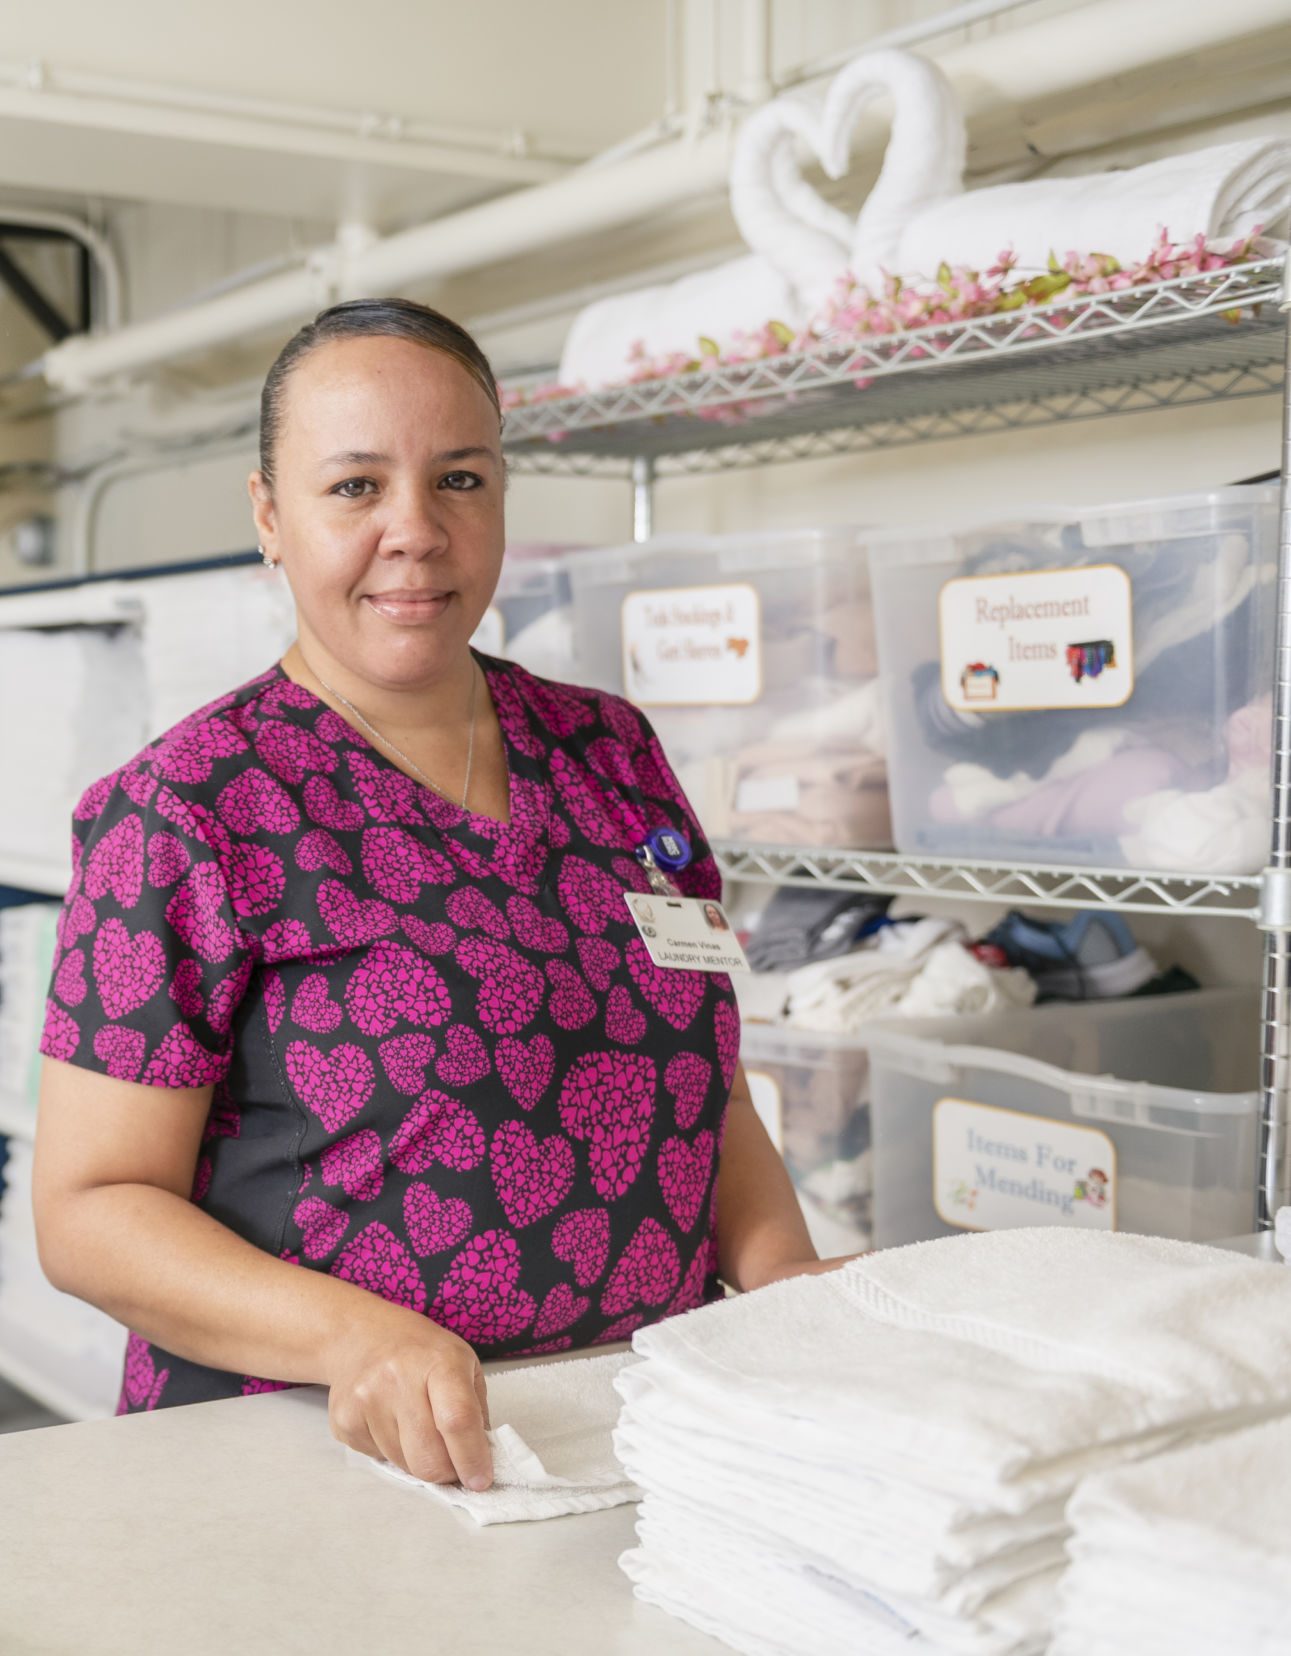 Carmen Vina, the Laundry Specialist at Mennonite Home Communities